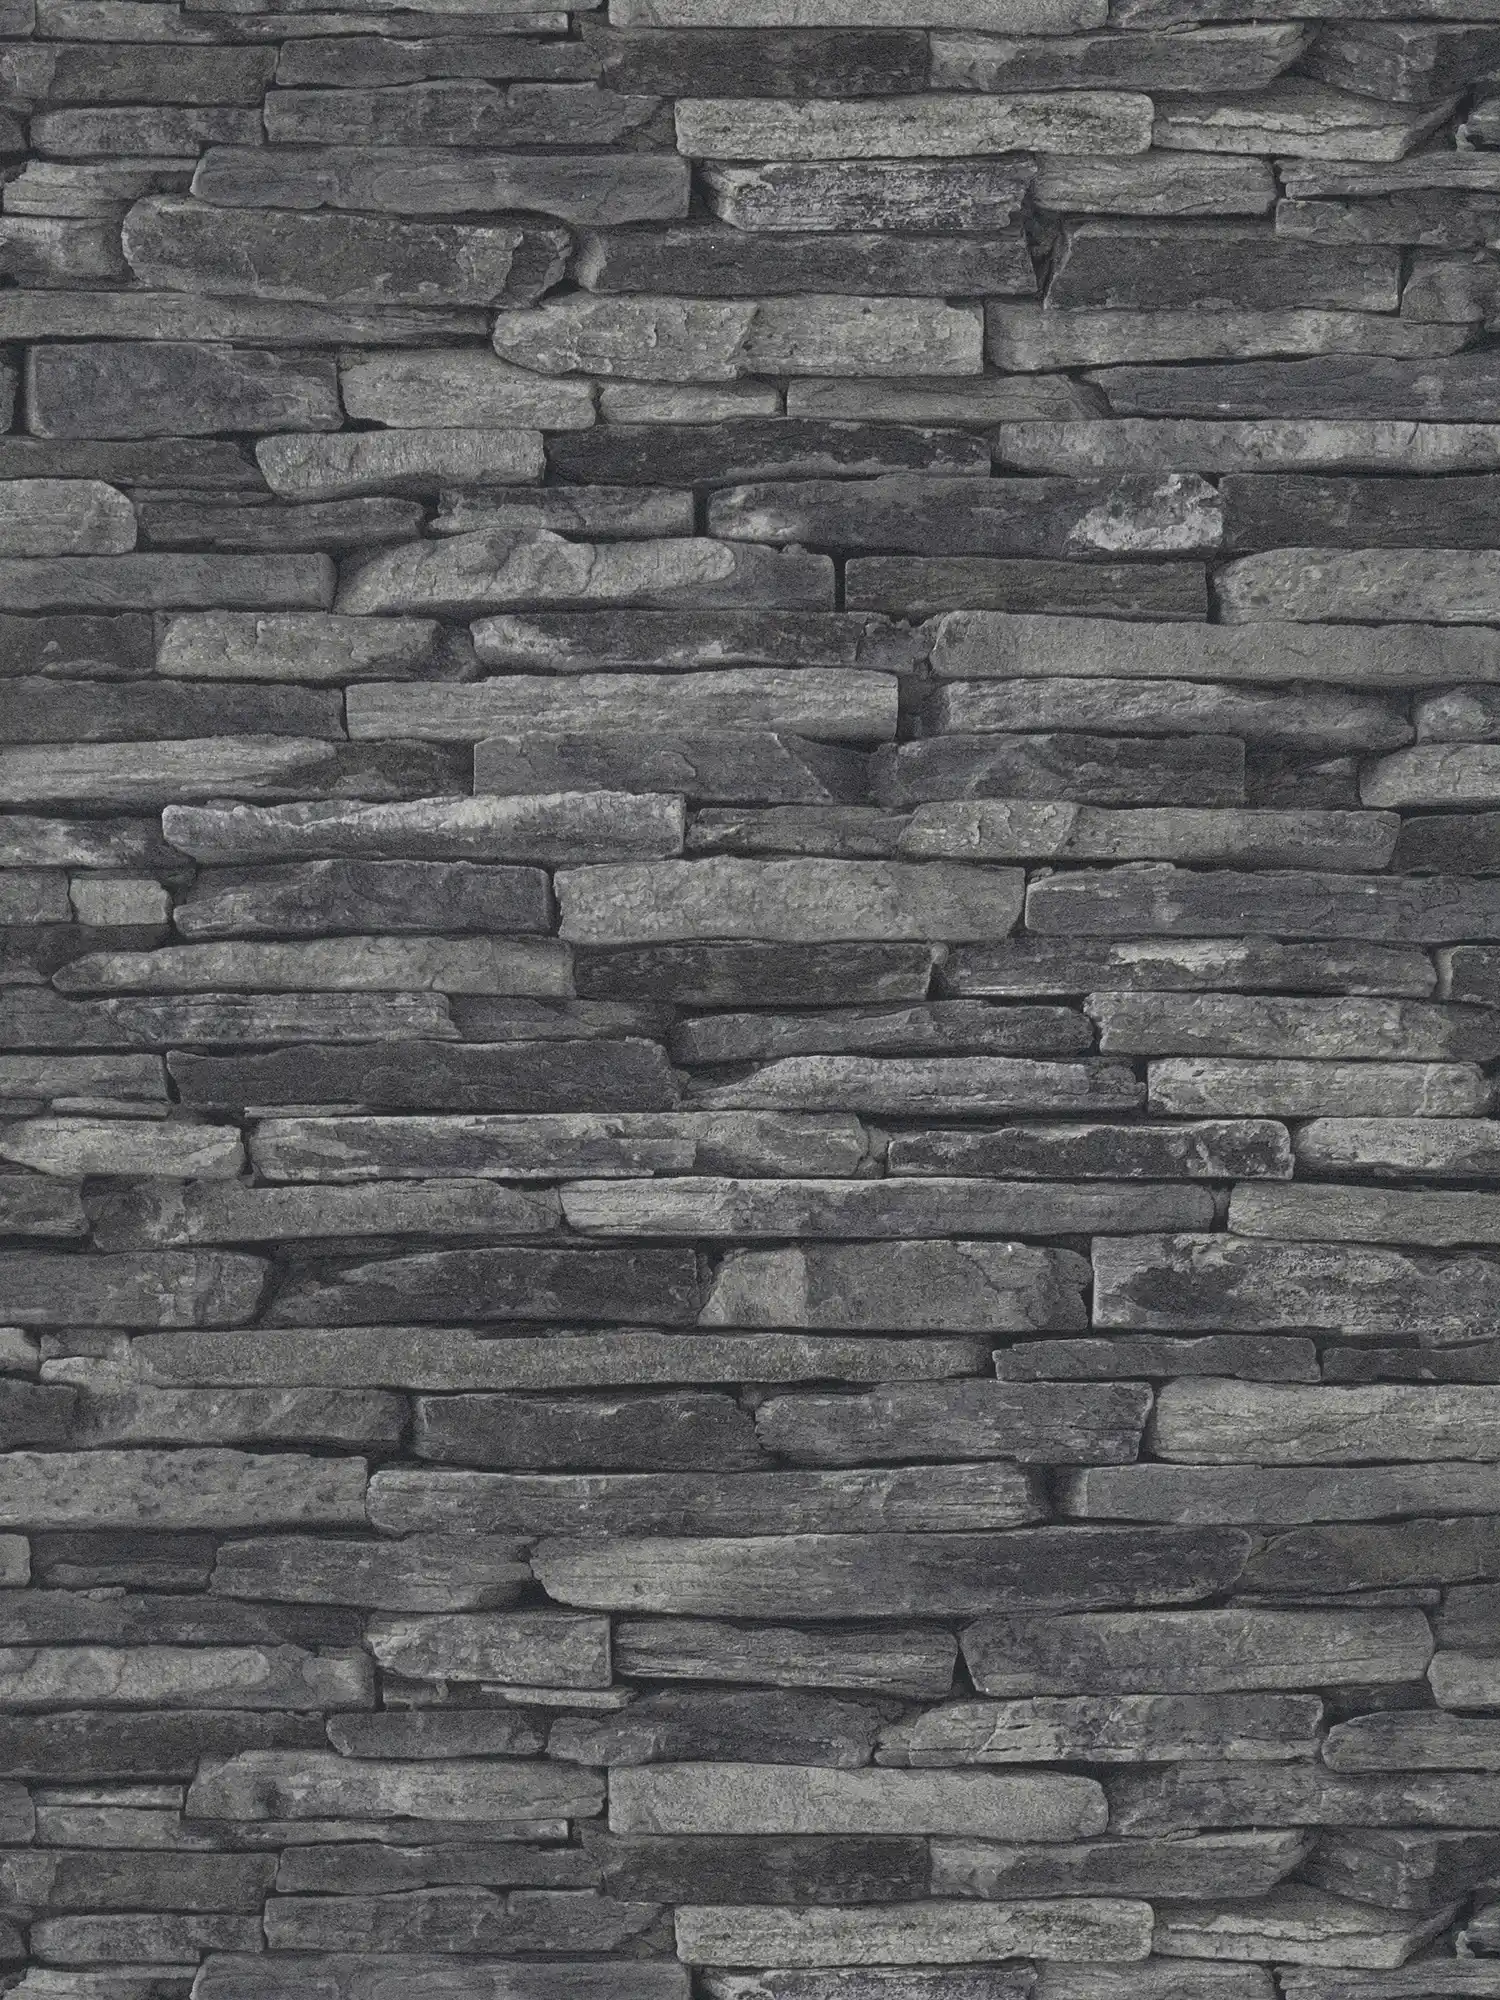         Wallpaper with stone look, dark natural stones & 3D effect - grey, black
    